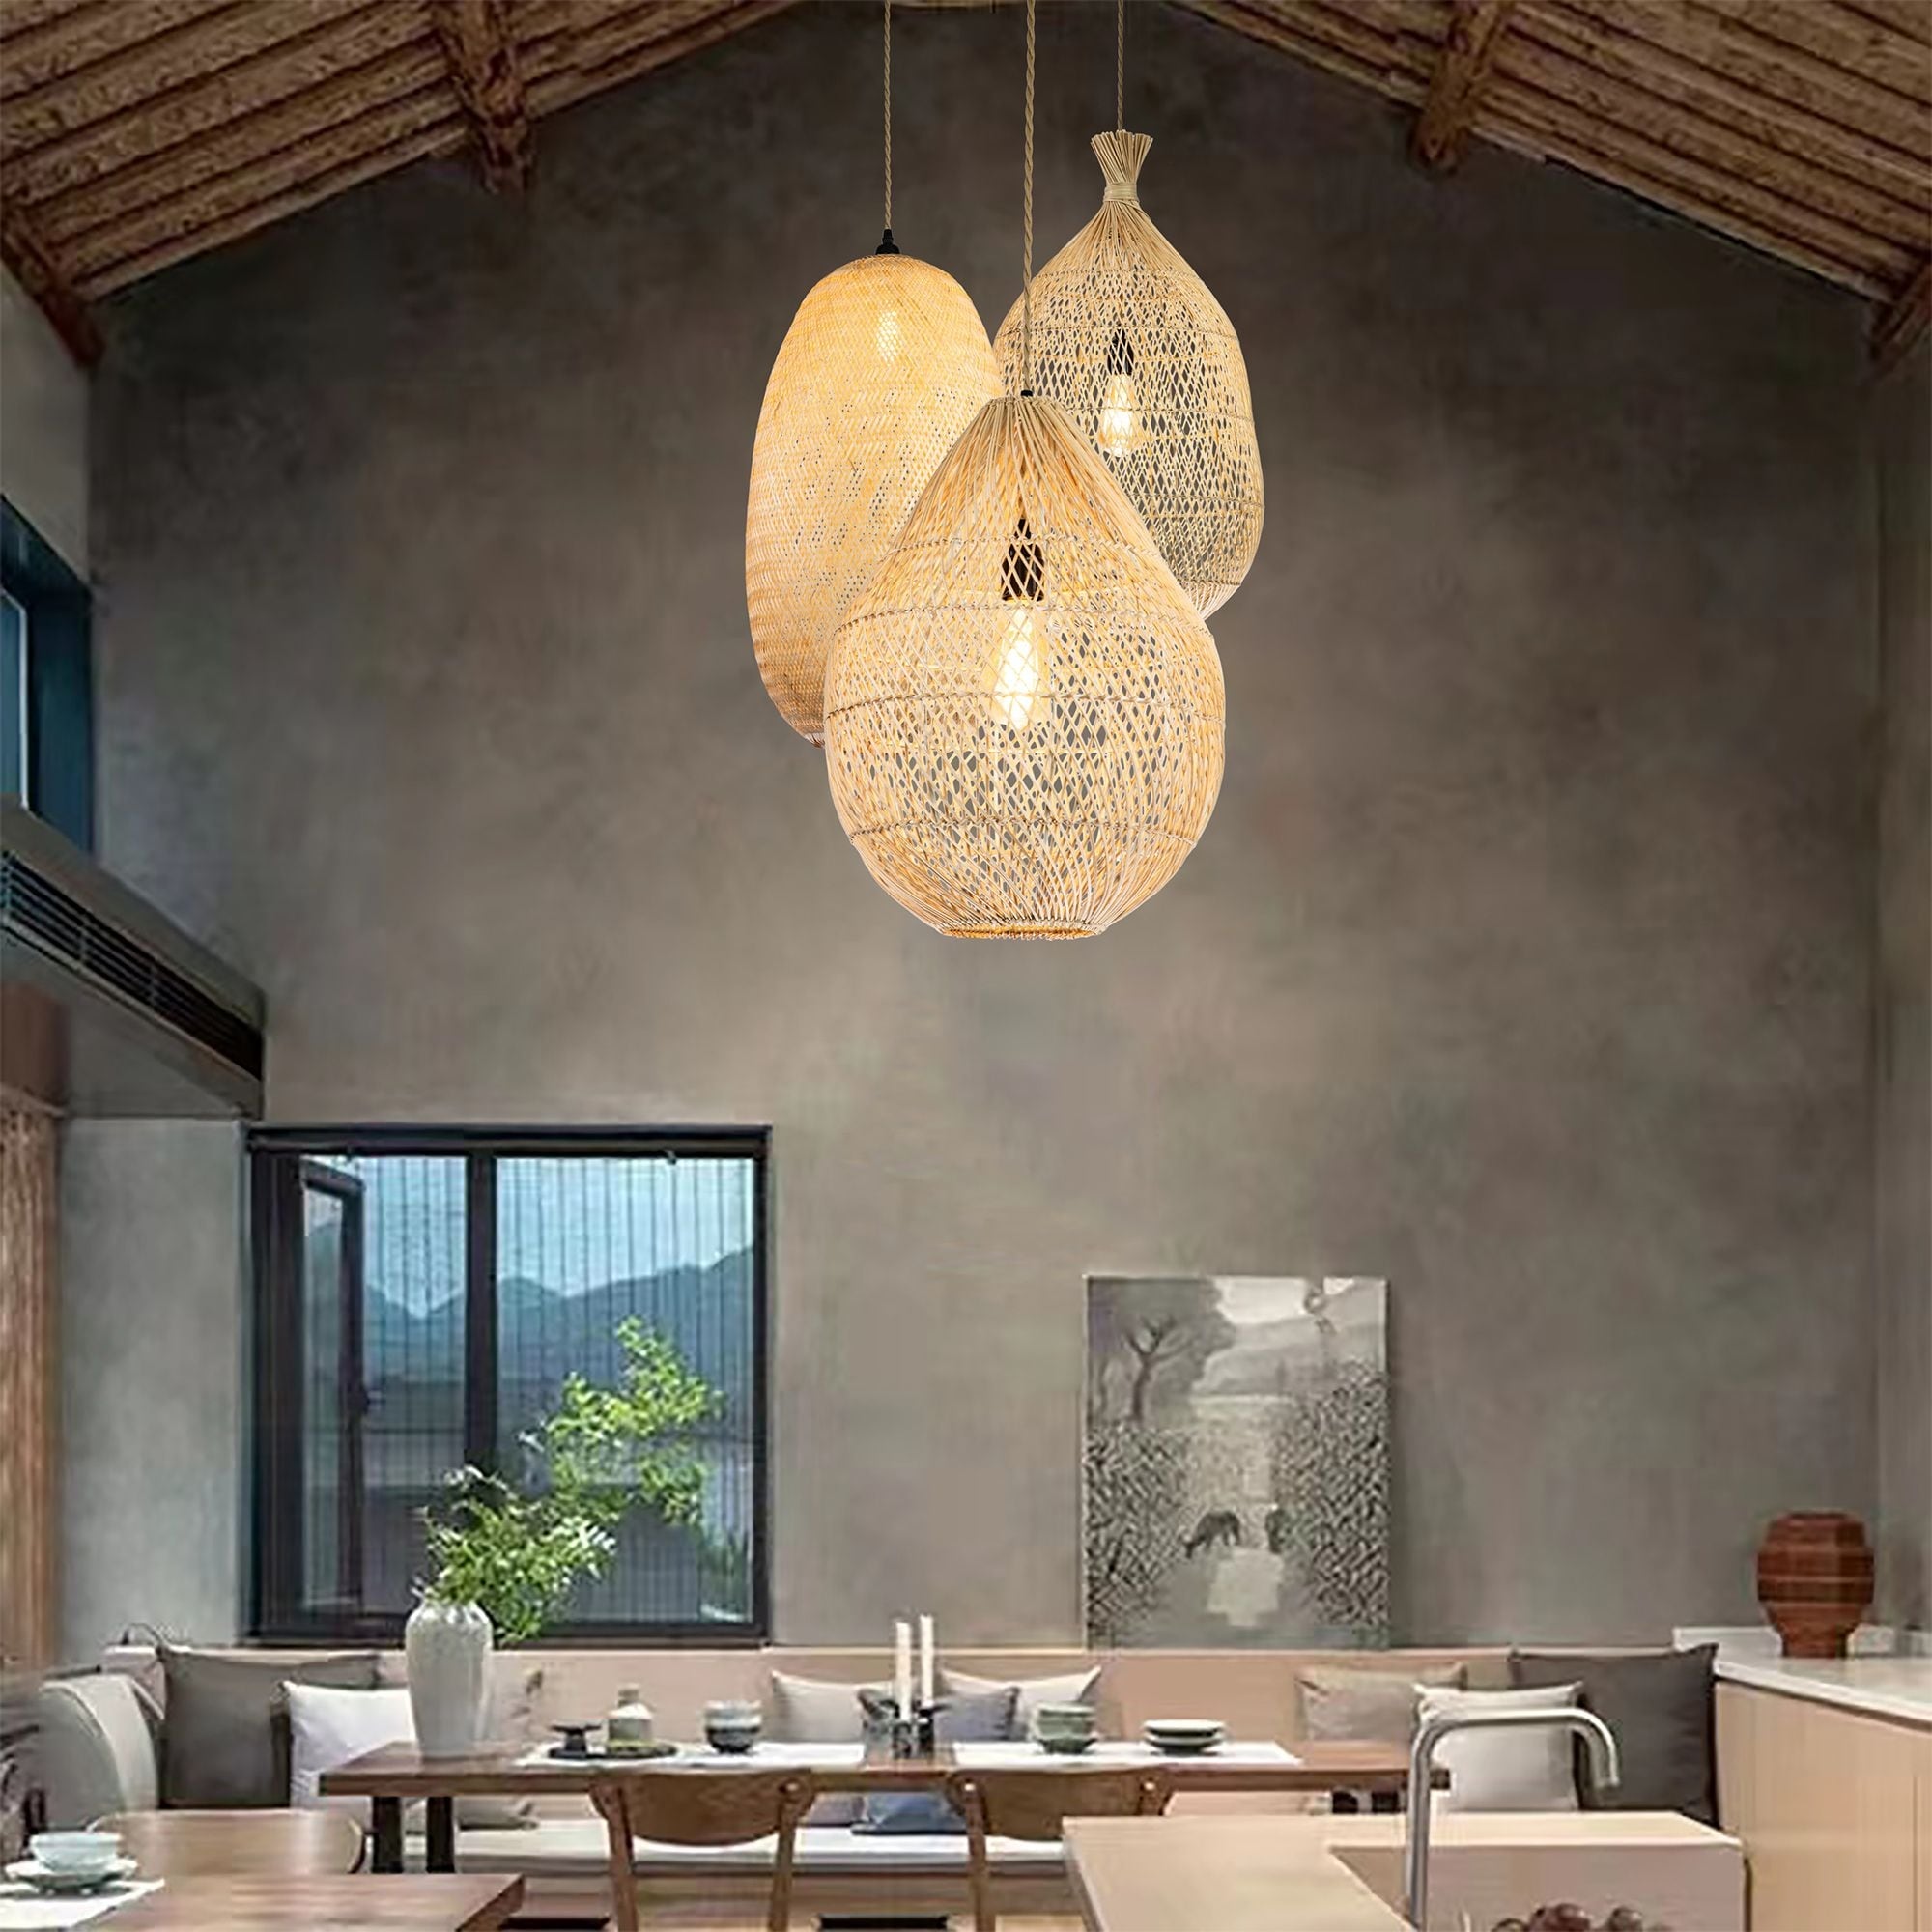 Hand-Blown Glass Pendant Light Fish Bowl Shade Ceiling Fixture